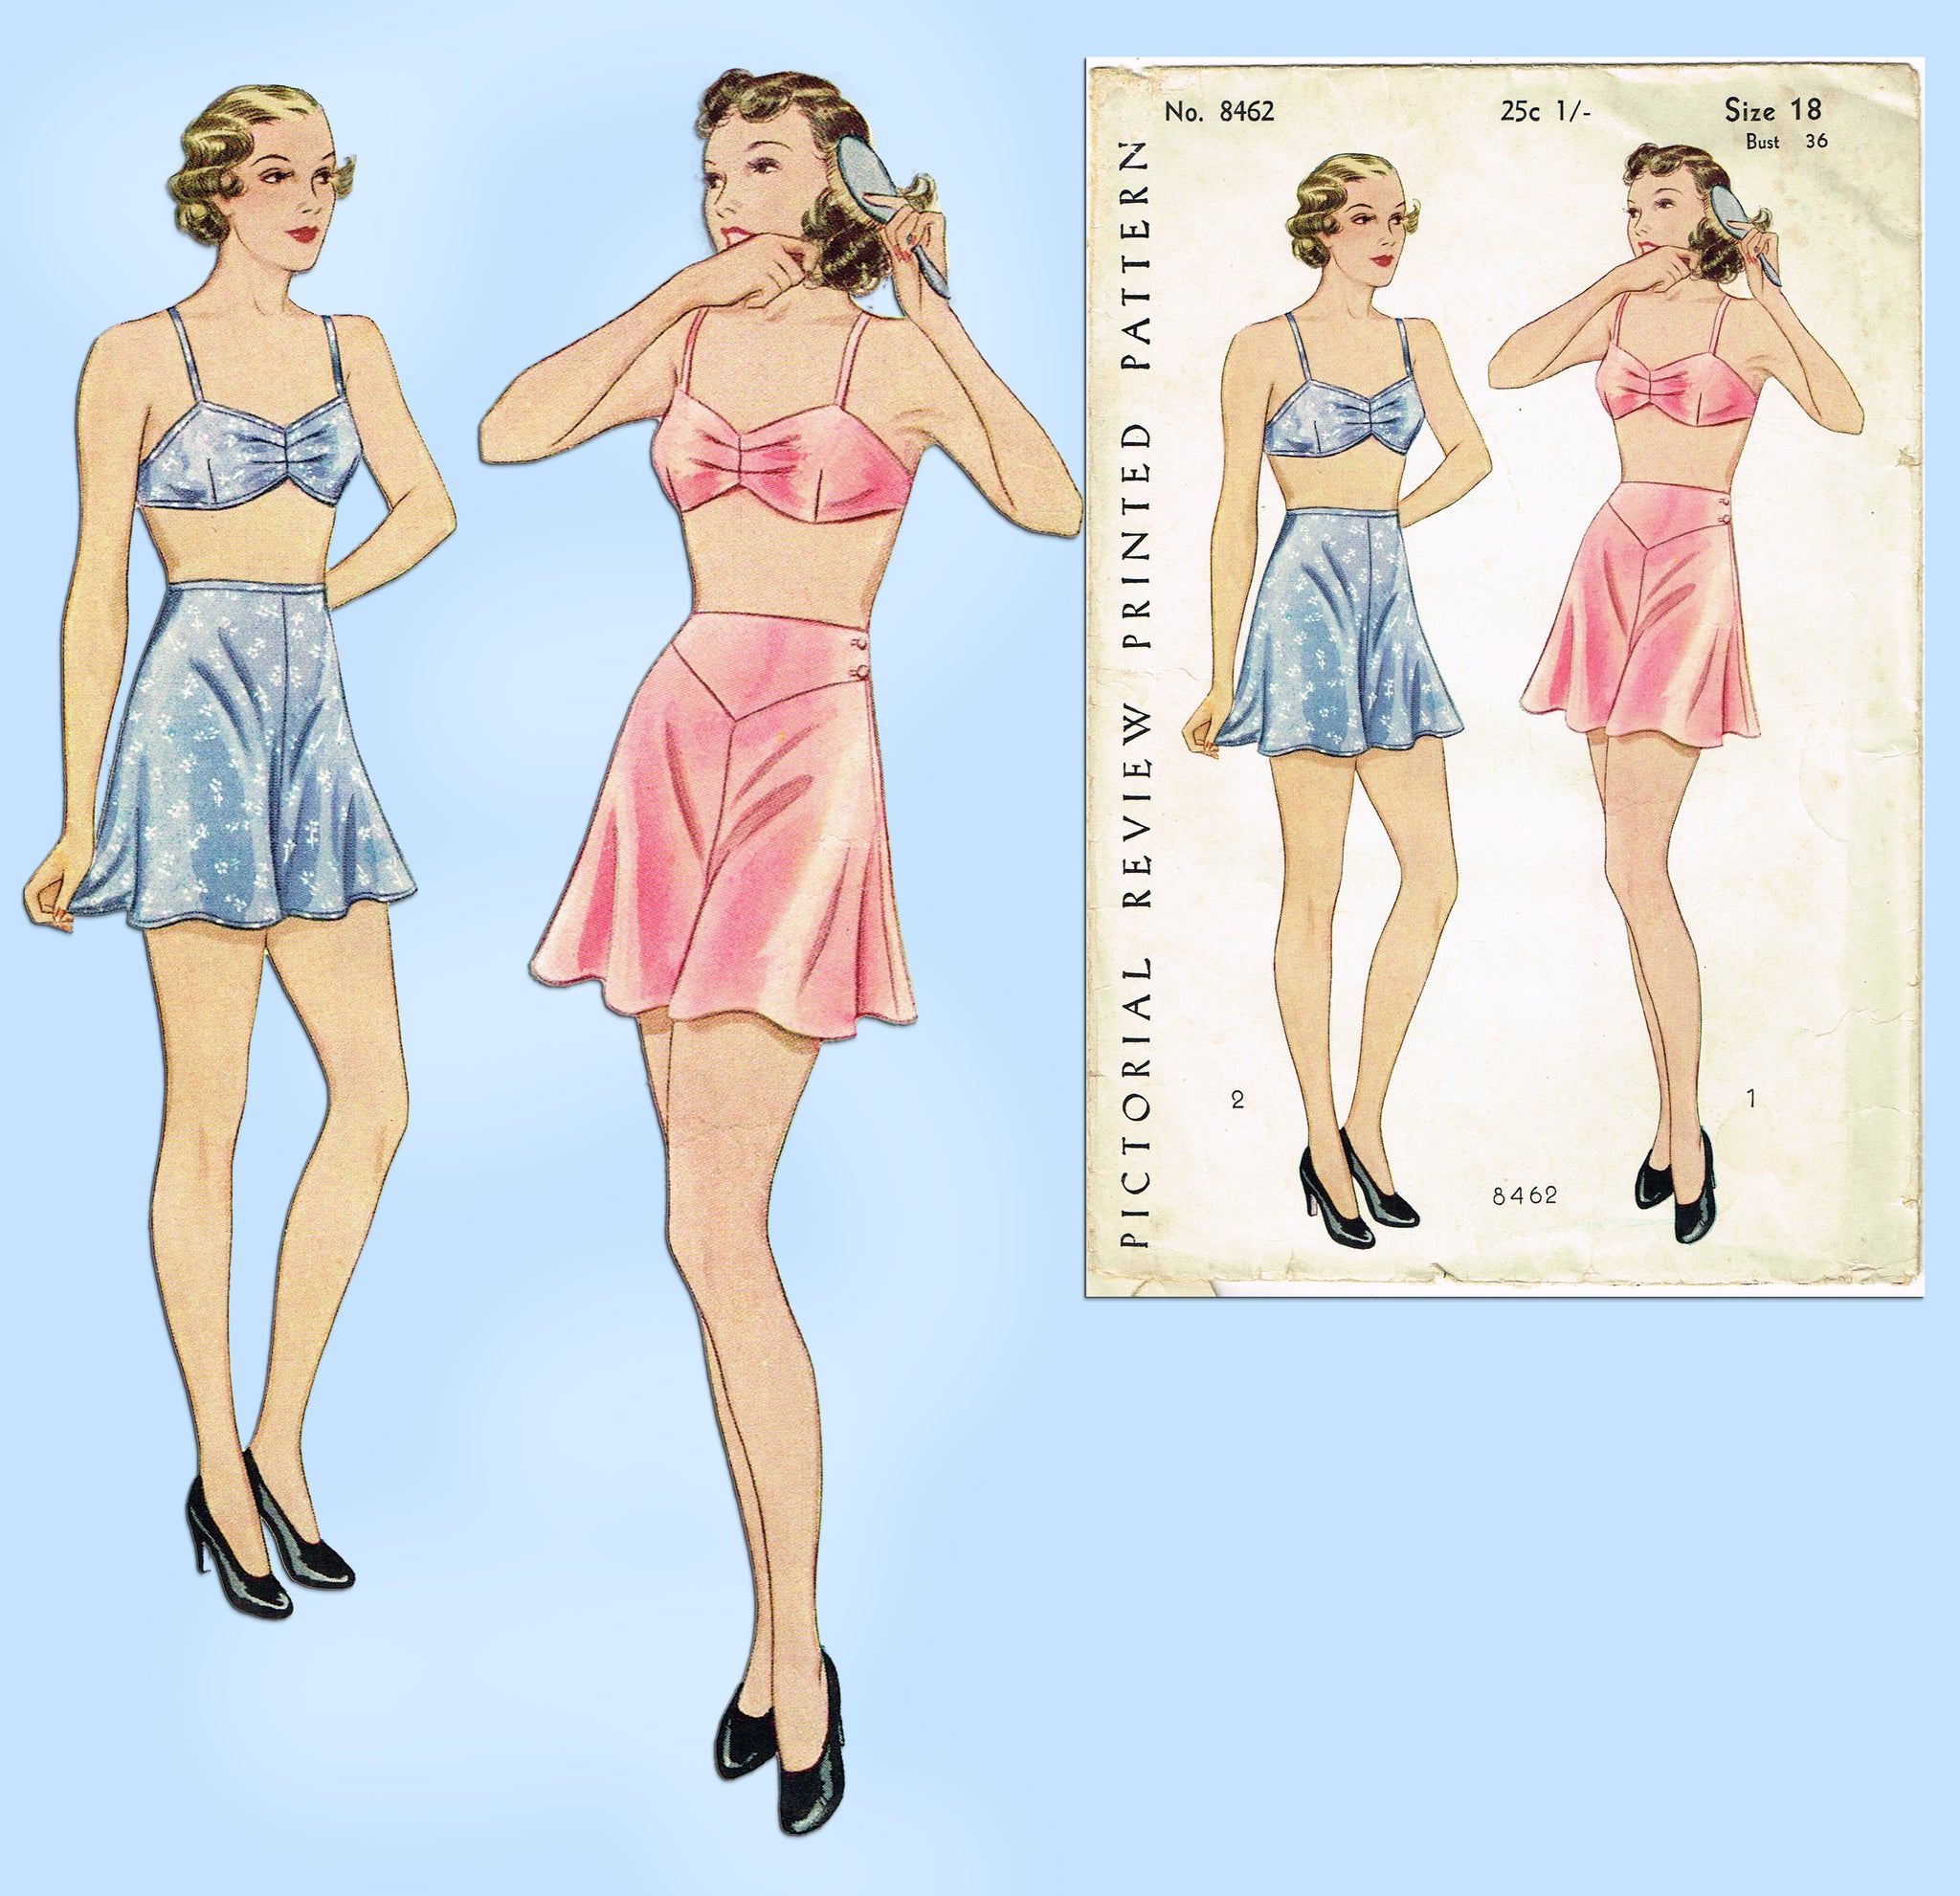 Sew Knit N Stretch 218 1960s Misses Ladies Bullet Bra Pattern Womens Vintage  Sewing Pattern Size 34 A B C Cup UNCUT 